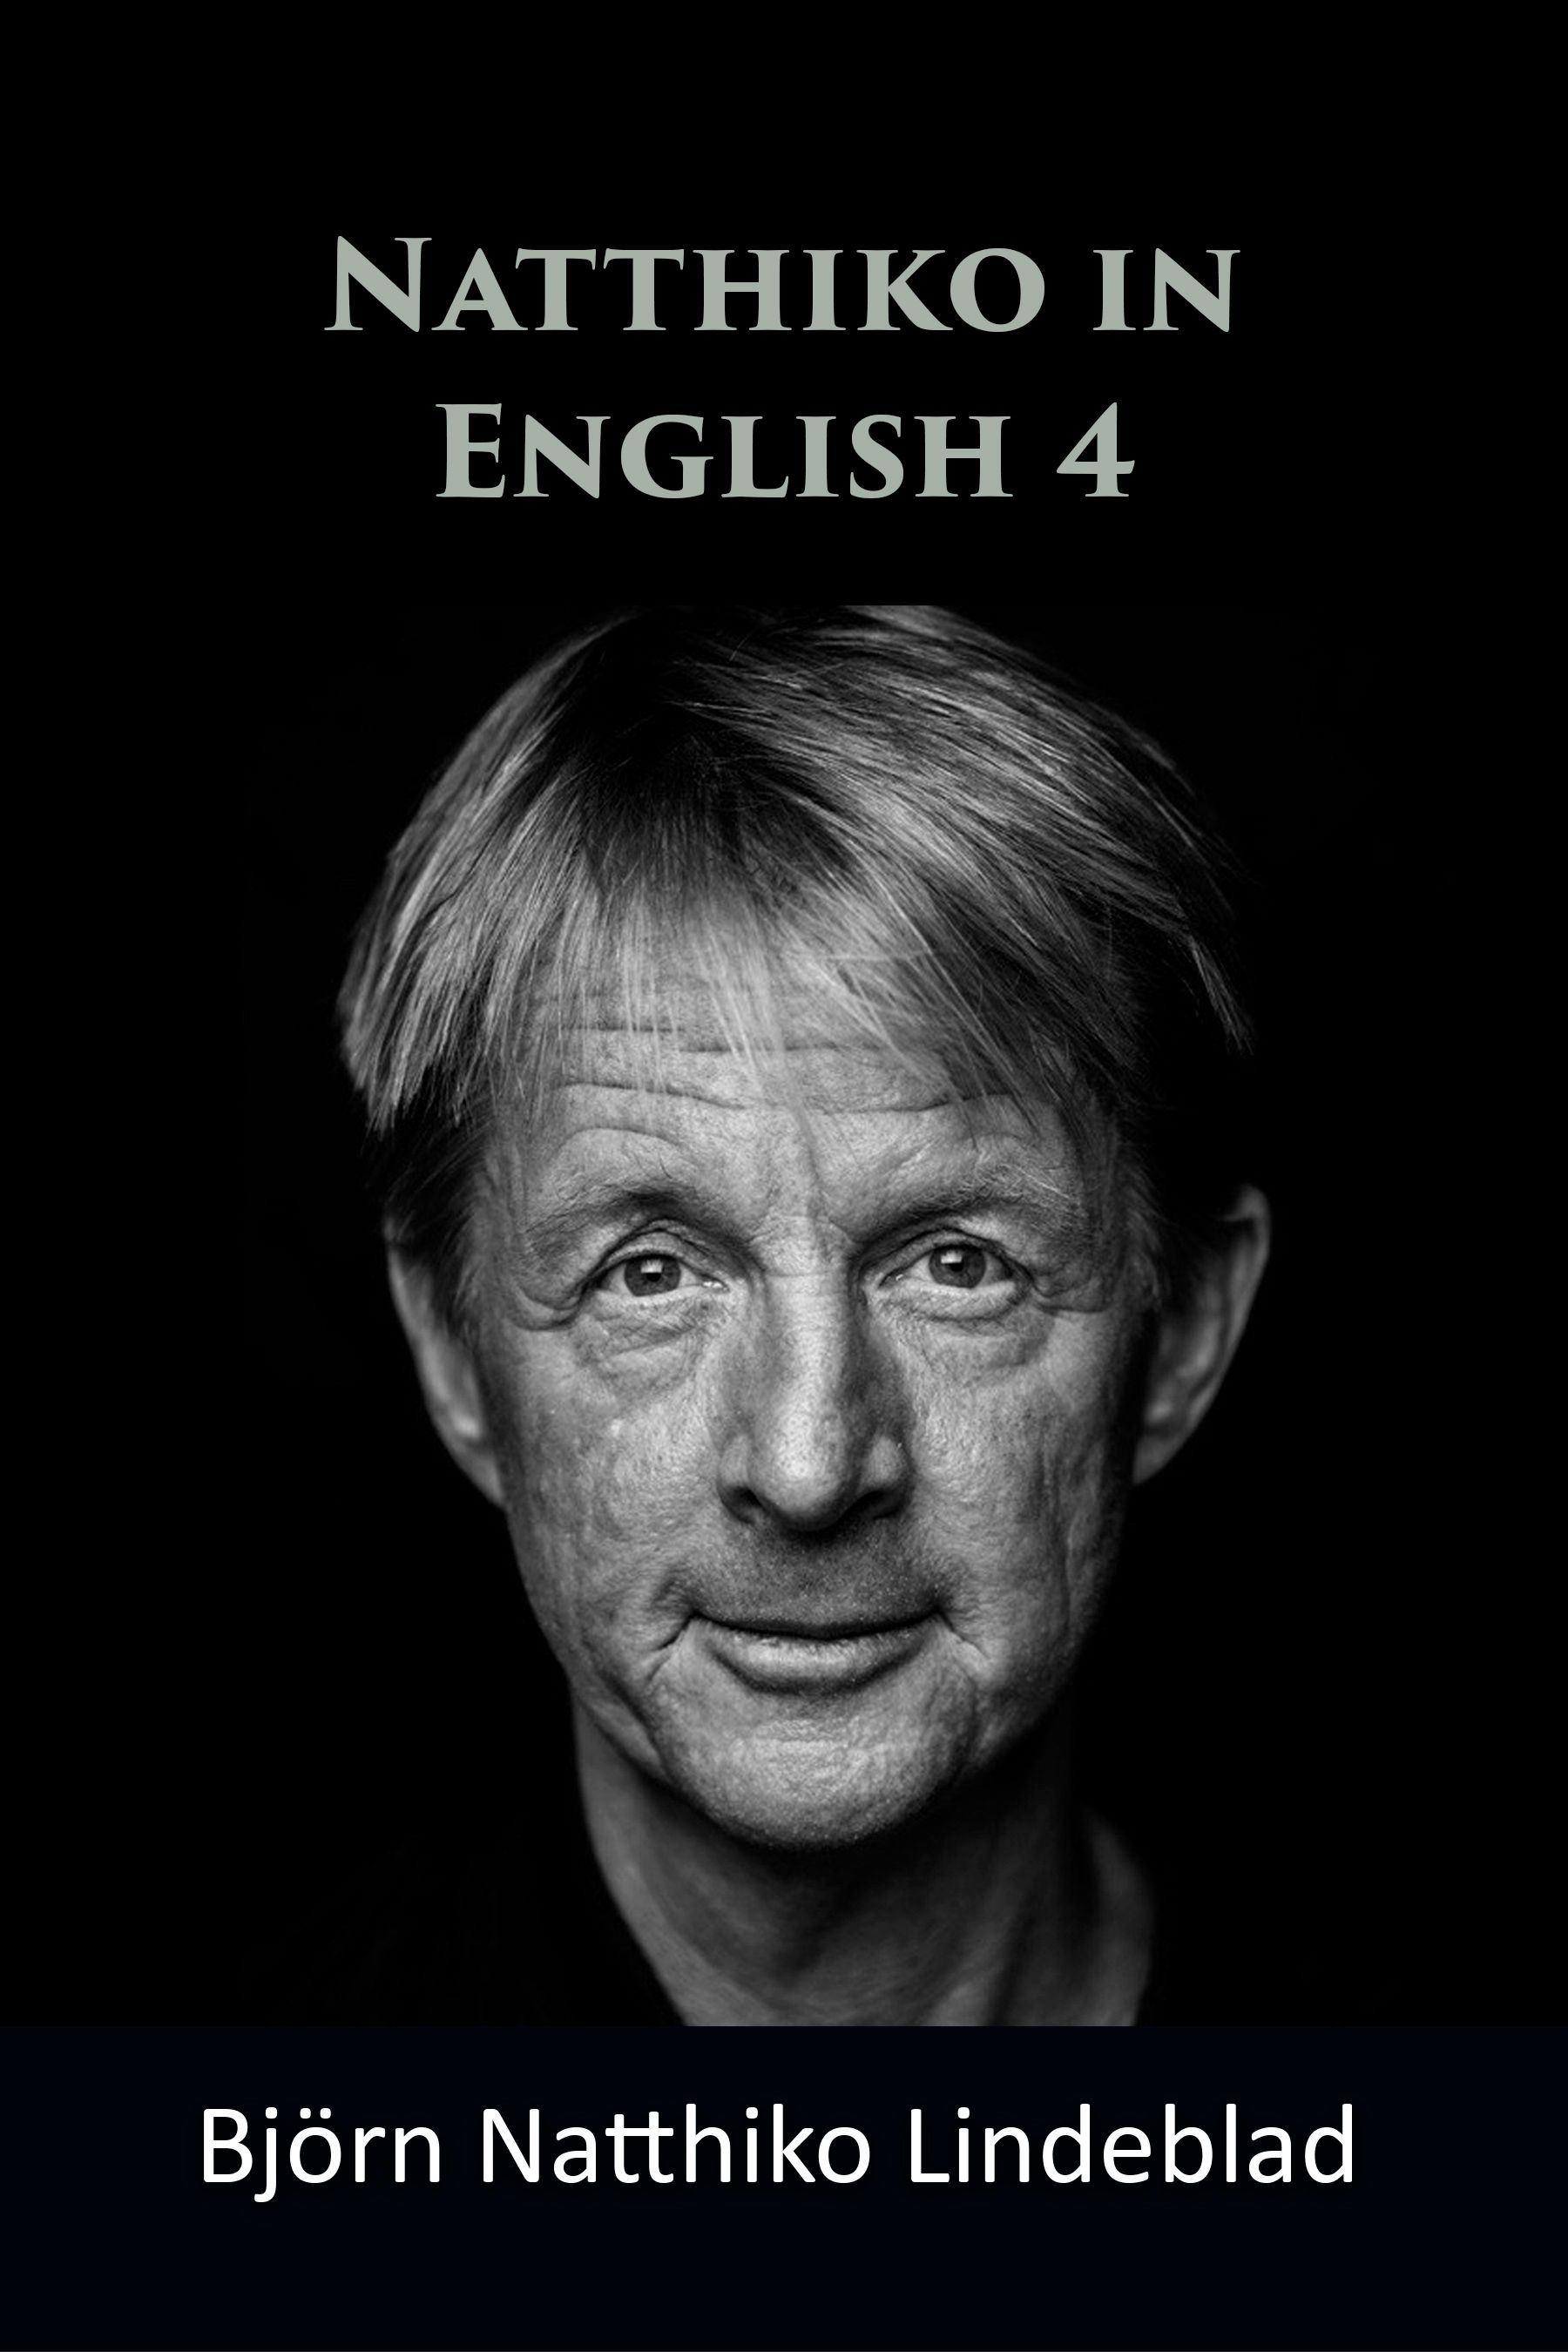 Natthiko in English 4, audiobook by Björn Natthiko Lindeblad